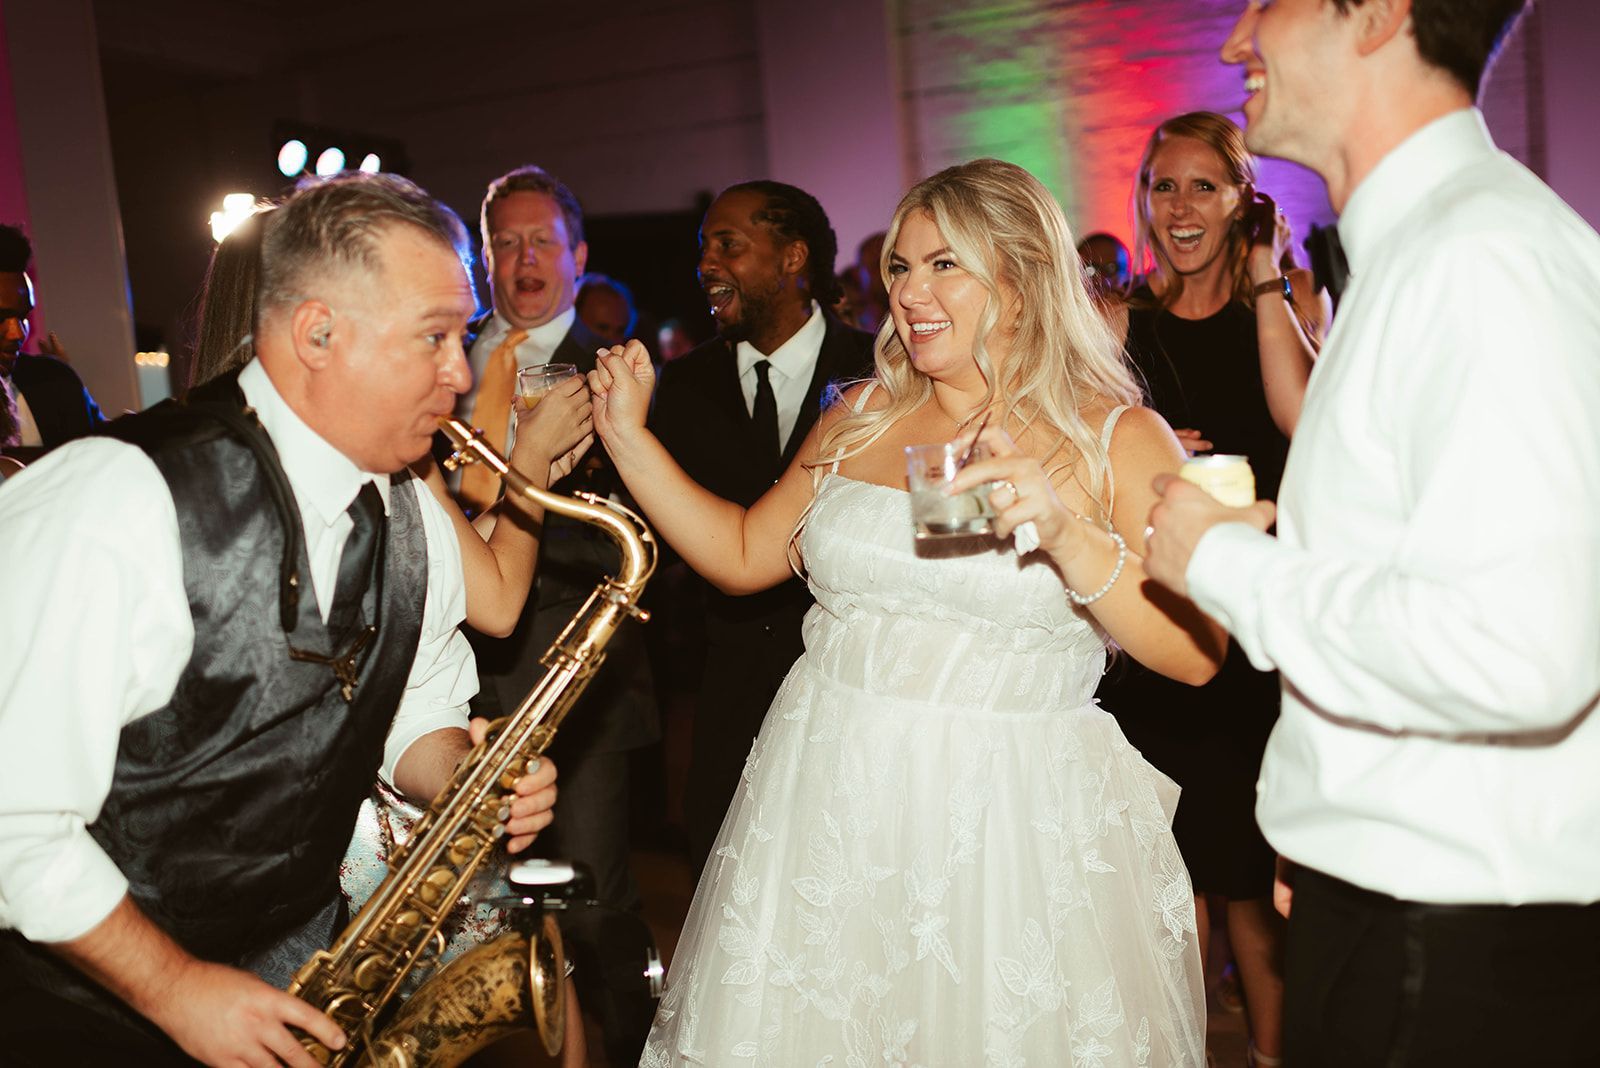 Mainstreet Soul playing saxophone at a wedding reception